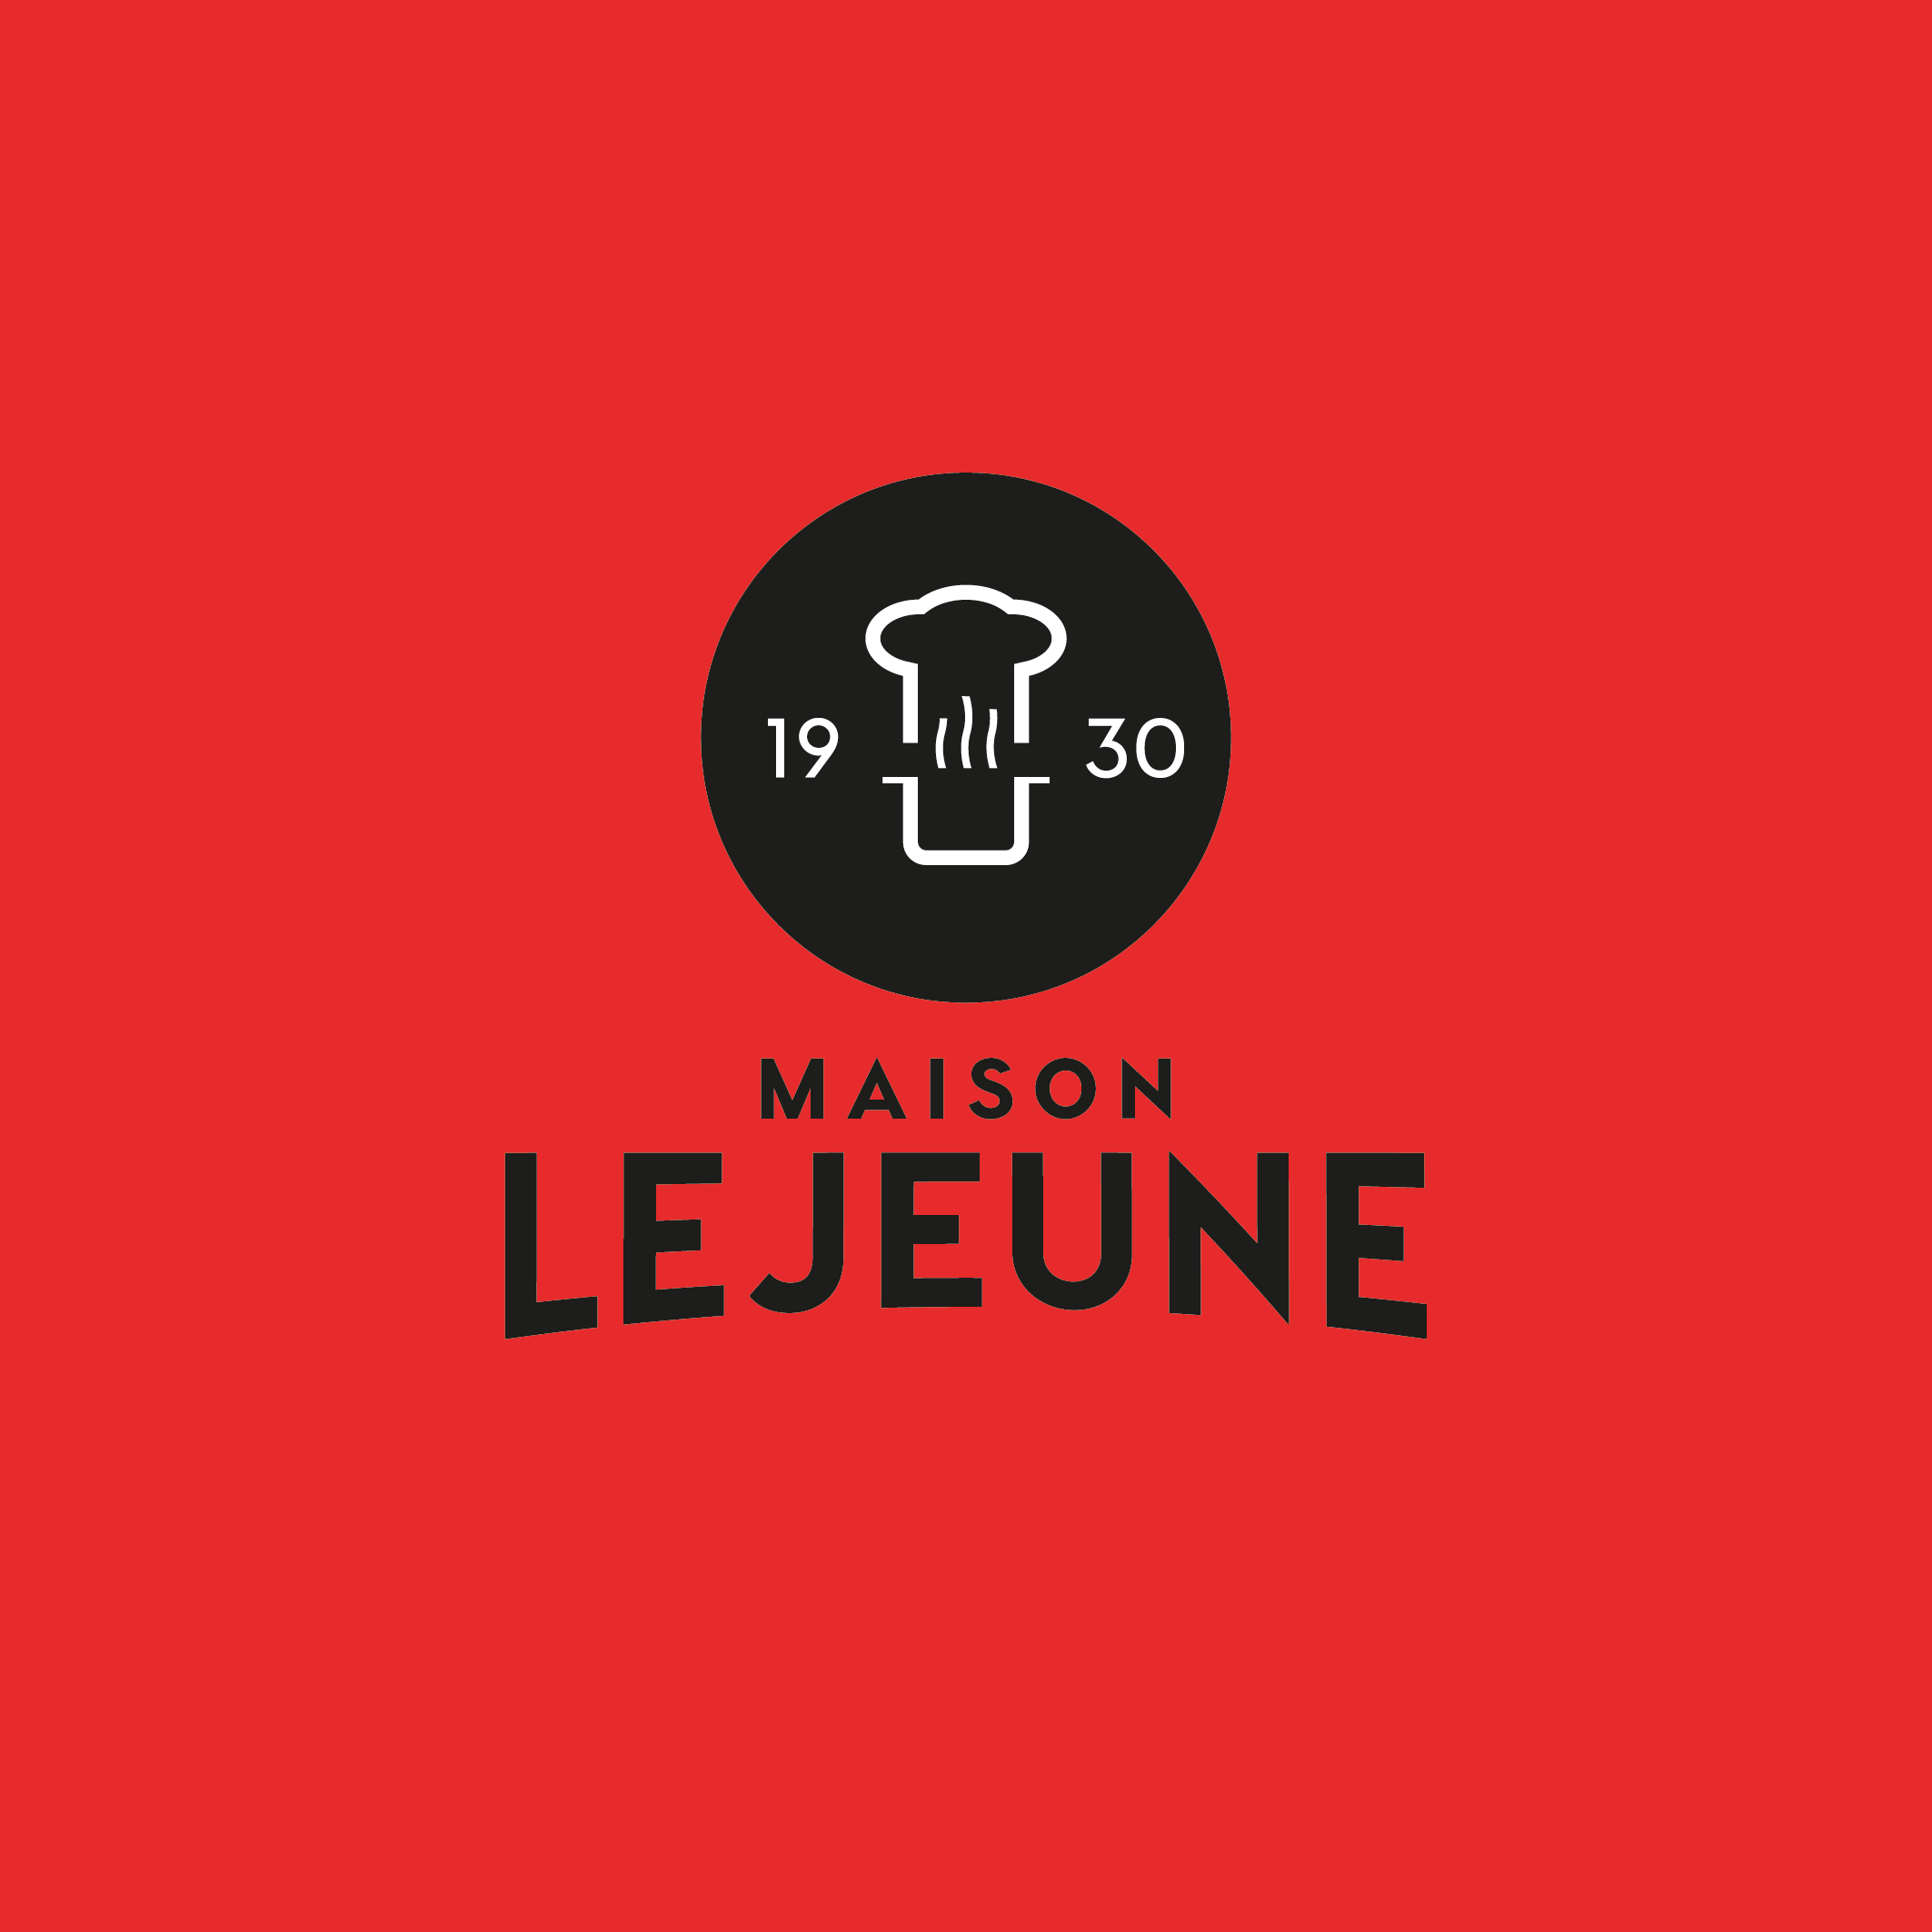 Maison Lejeune logo